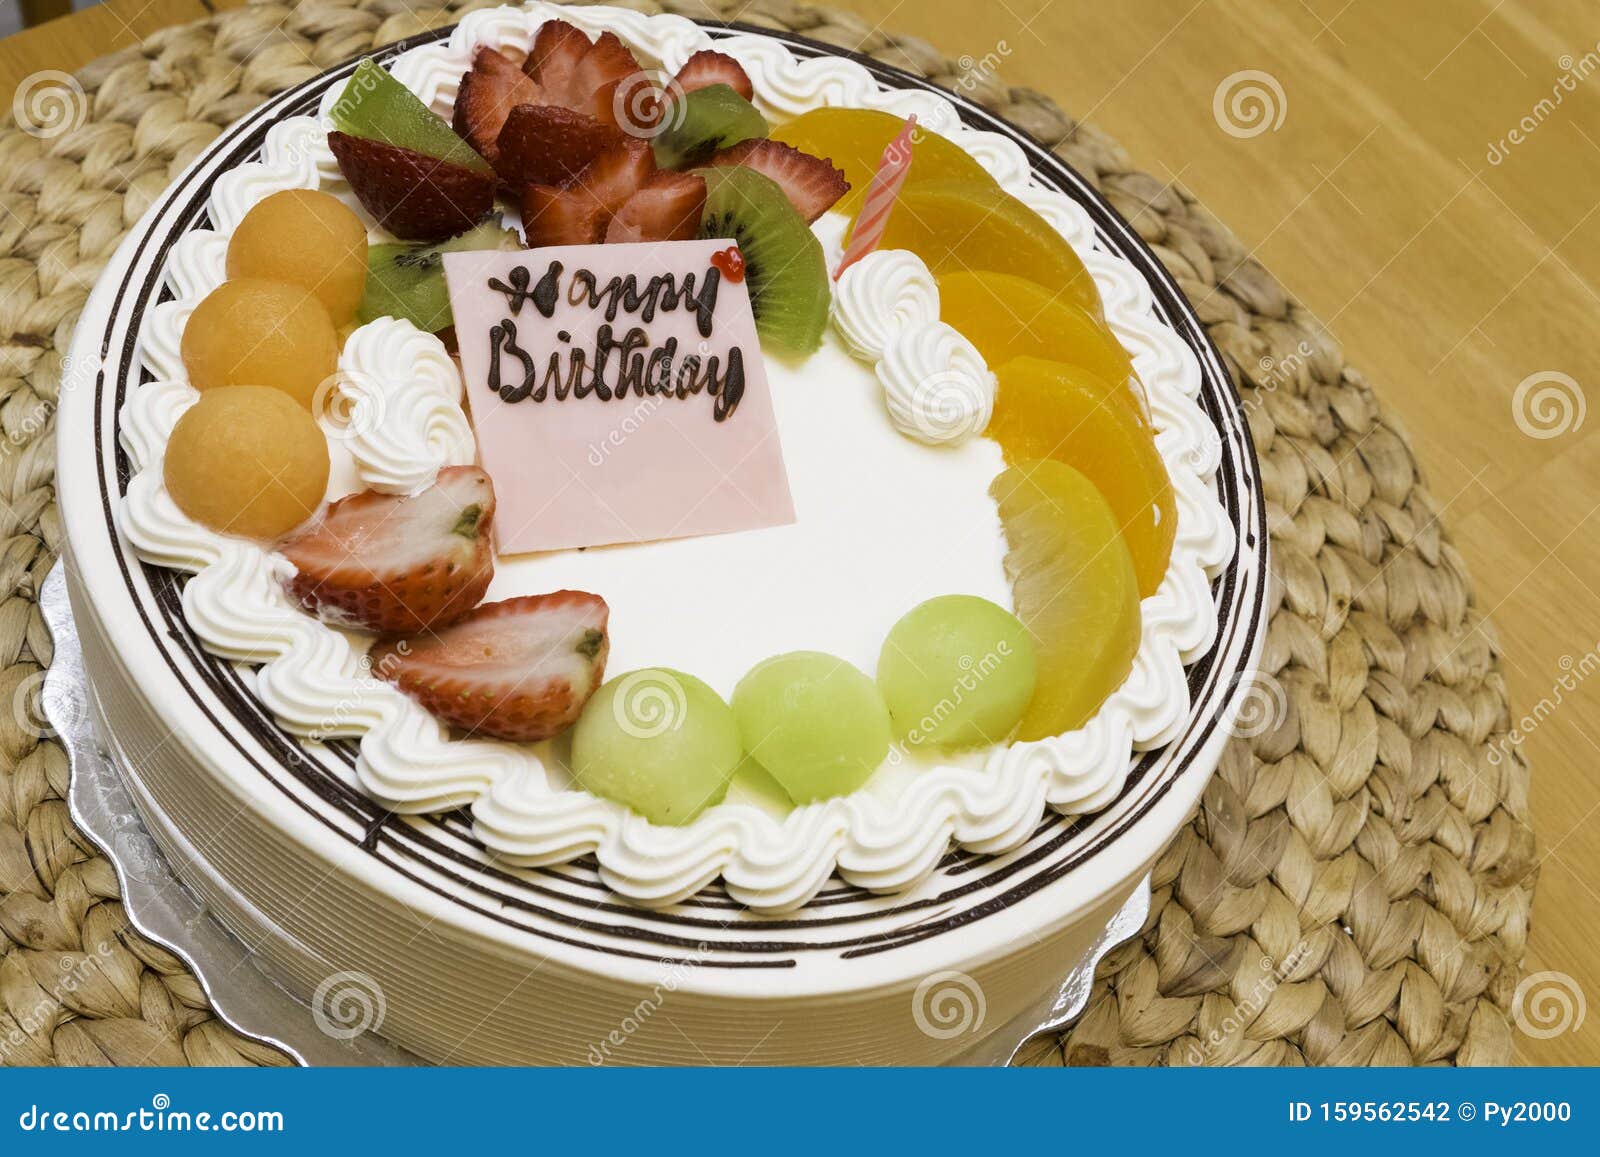 3 415 Happy Birthday Fresh Fruit Cake Photos Free Royalty Free Stock Photos From Dreamstime